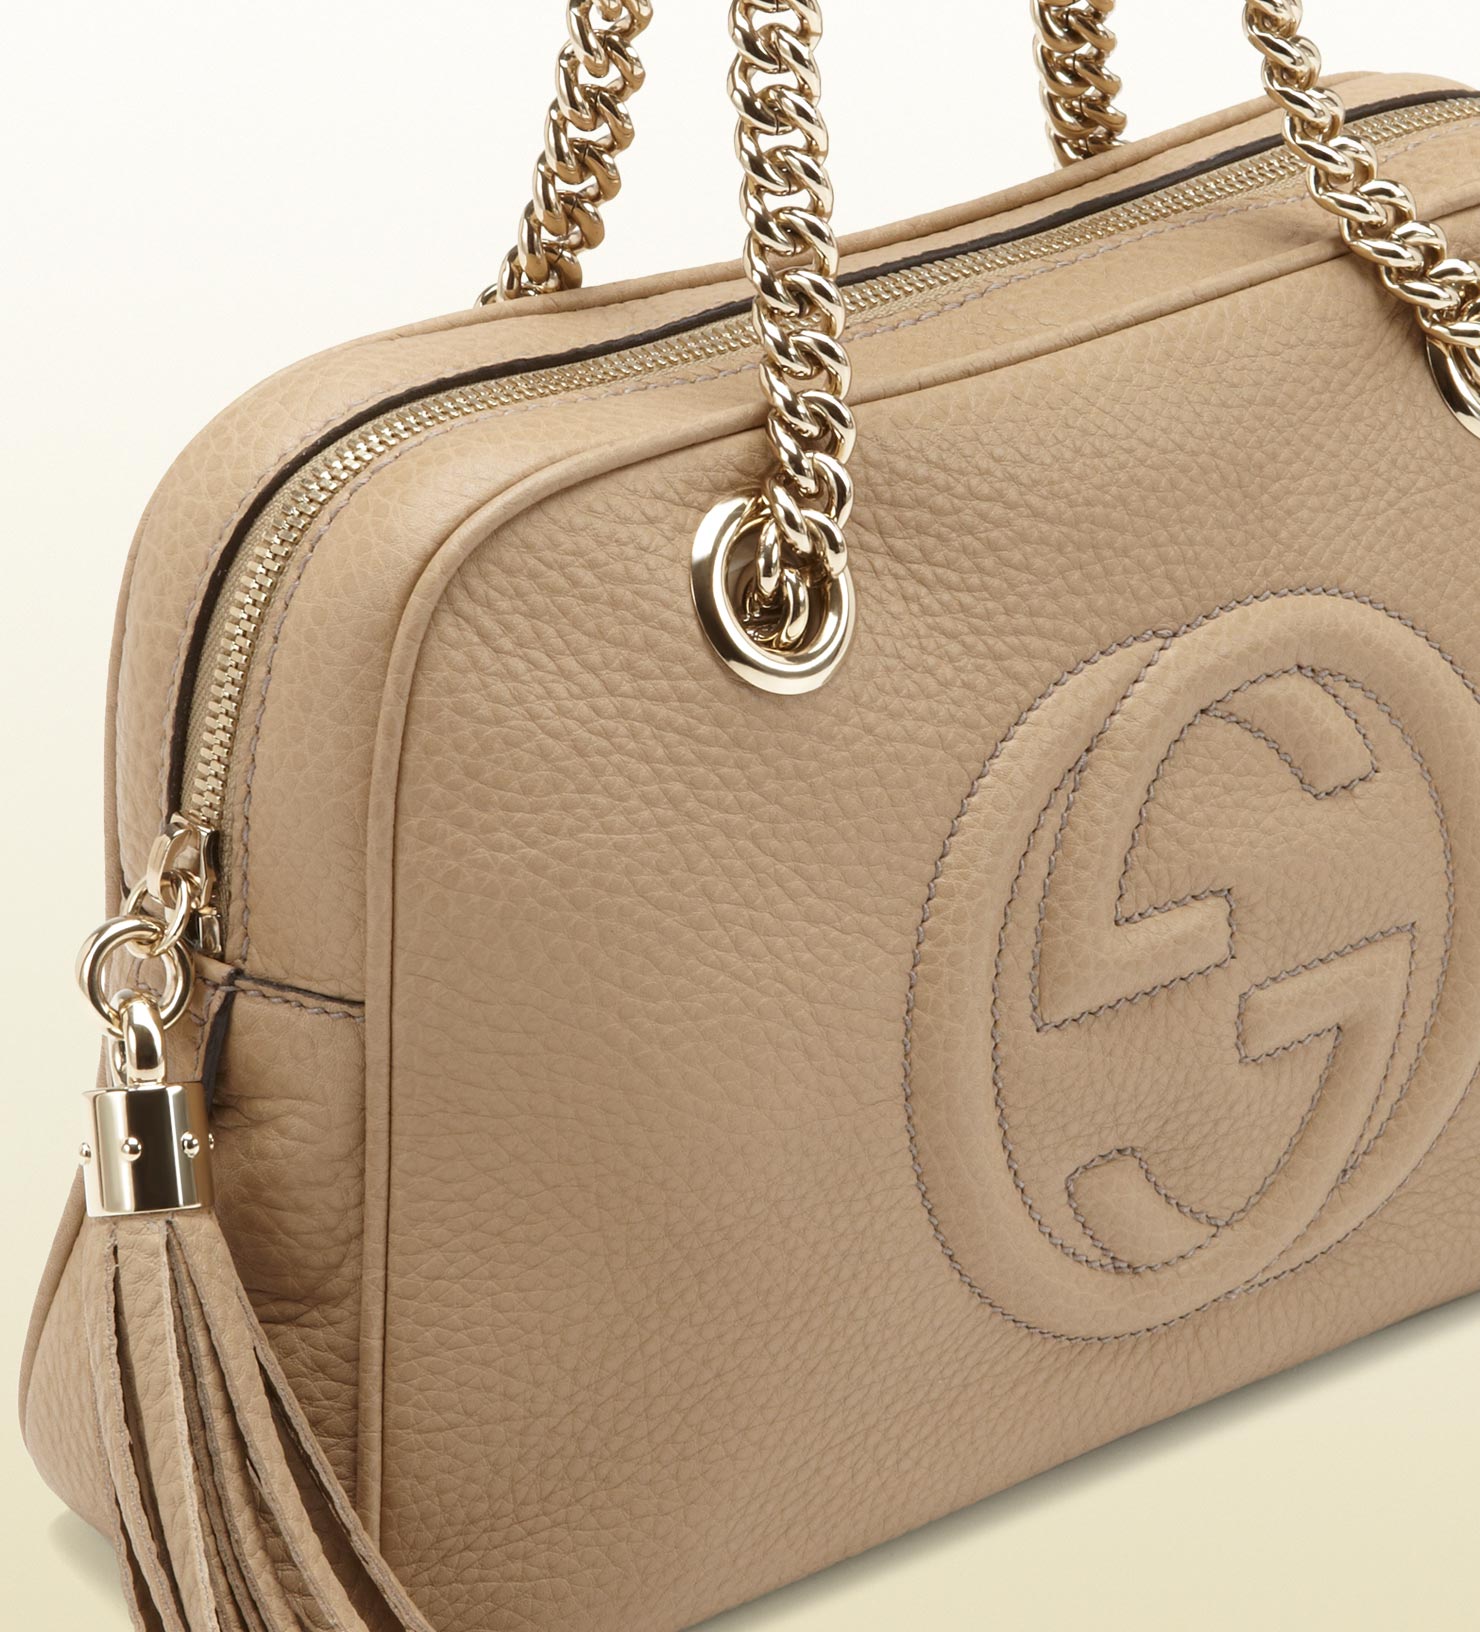 Gucci Soho Leather Shoulder Bag in Natural | Lyst